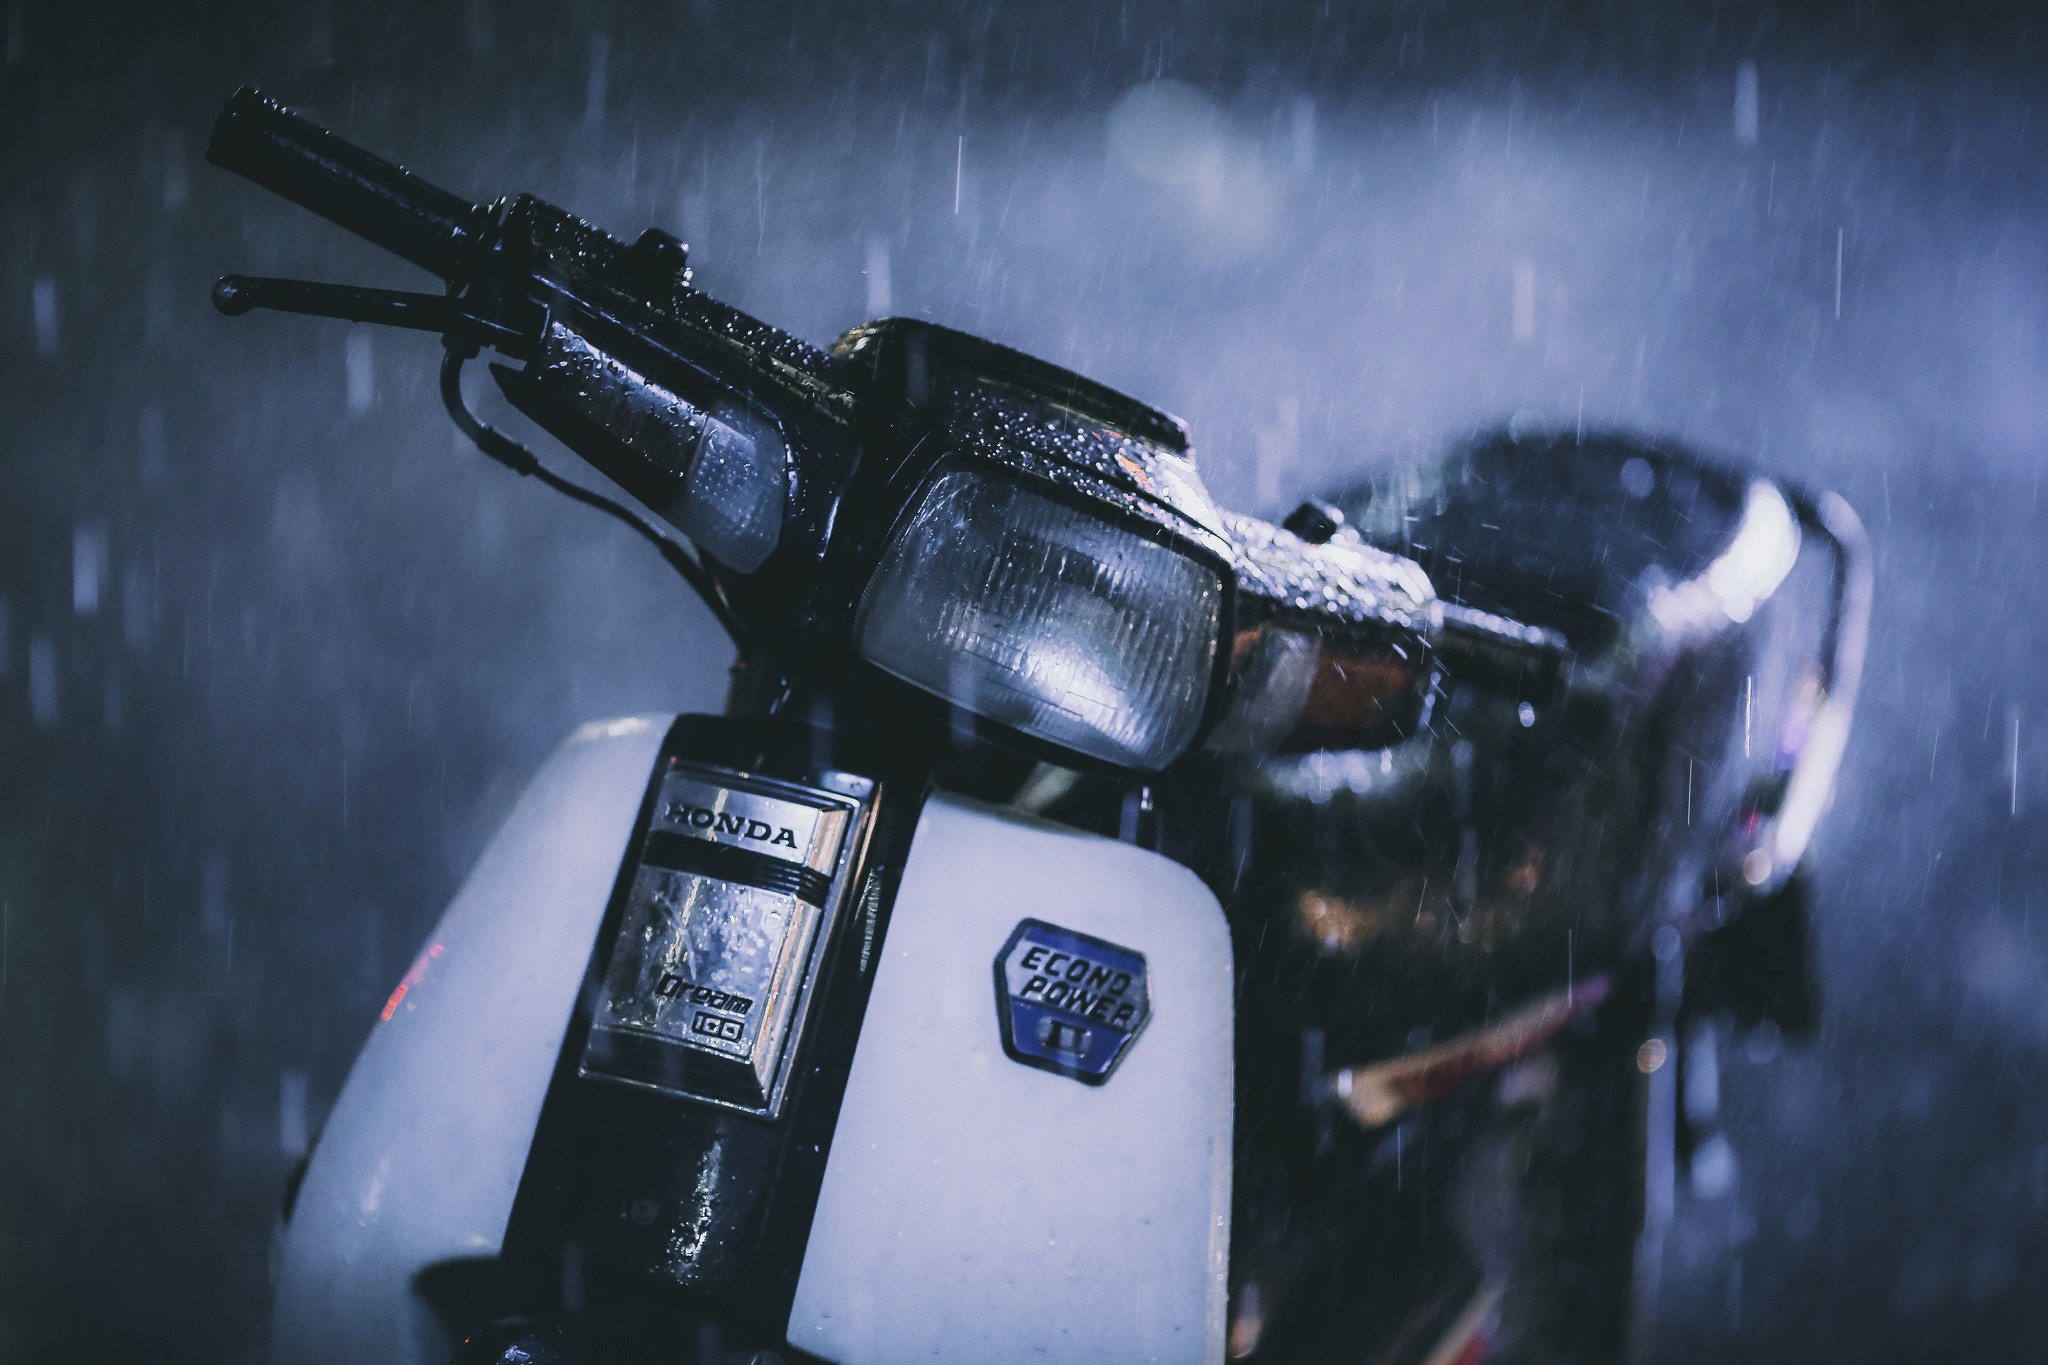 General 2048x1365 vehicle Honda rain water Japanese motorcycles